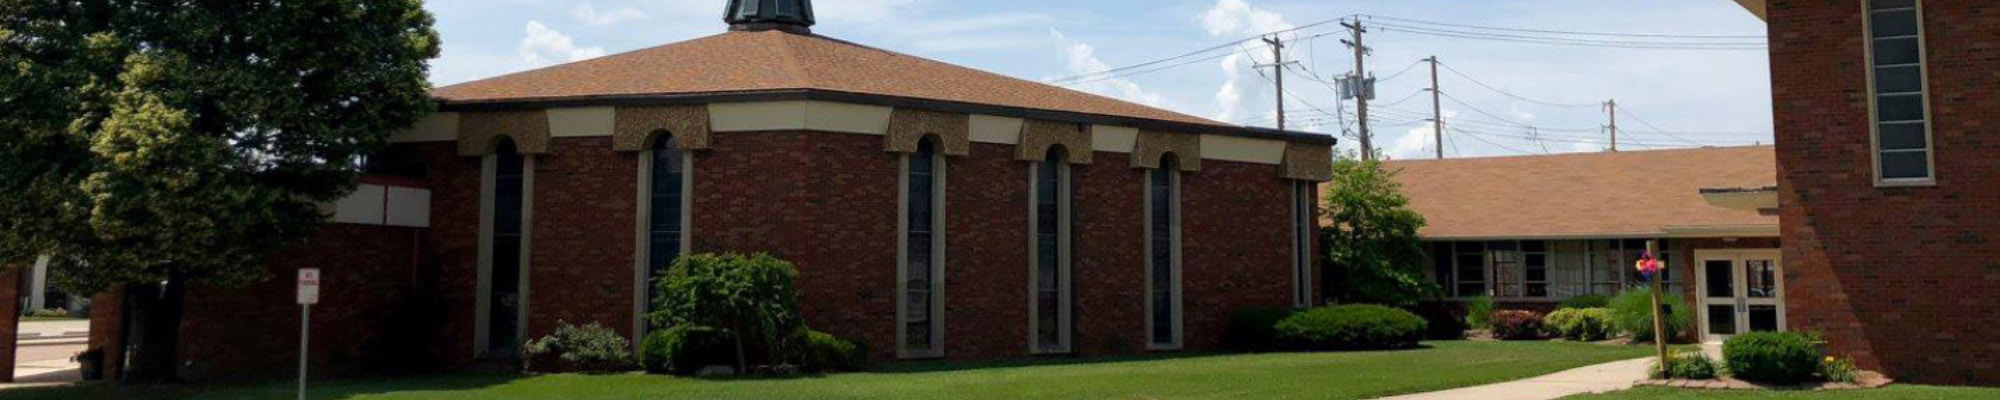 First United Presbyterian Church in Collinsville, IL Exterior